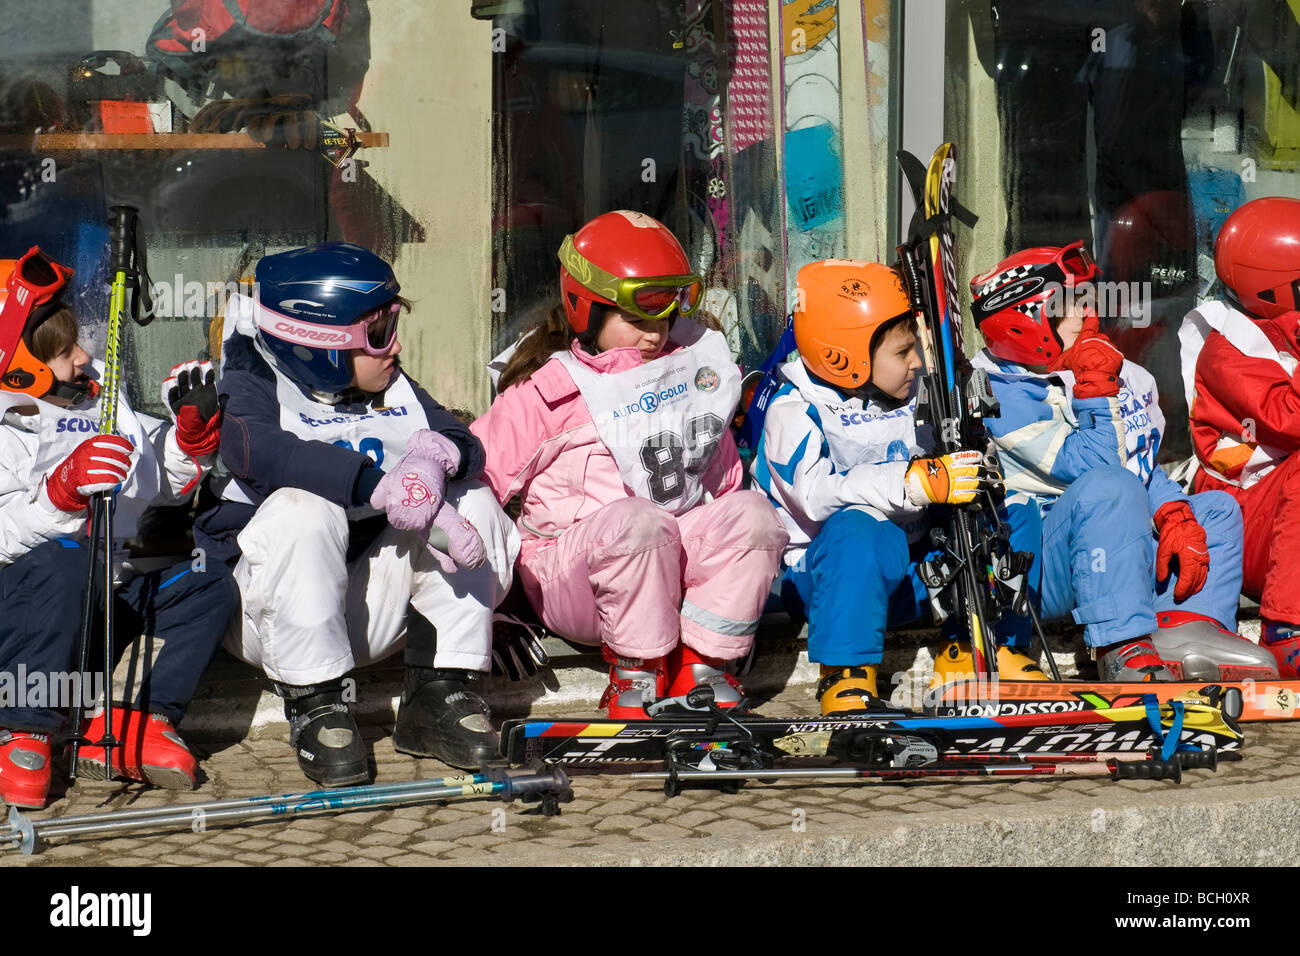 Ski School Gressoney la Trinitè Aosta Italy Stock Photo